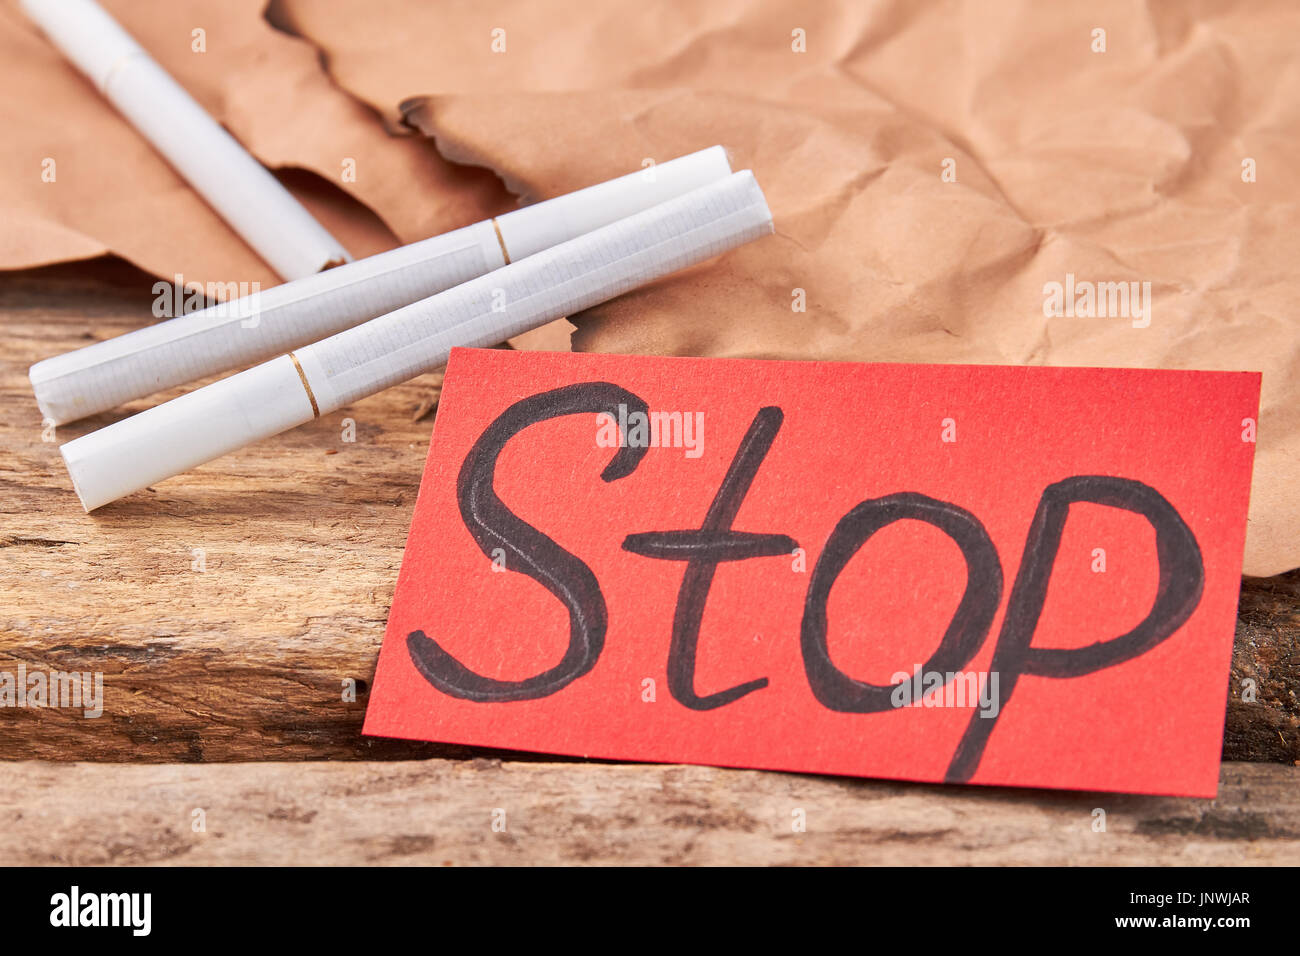 Stop smoking, nicotine is danger. Stock Photo